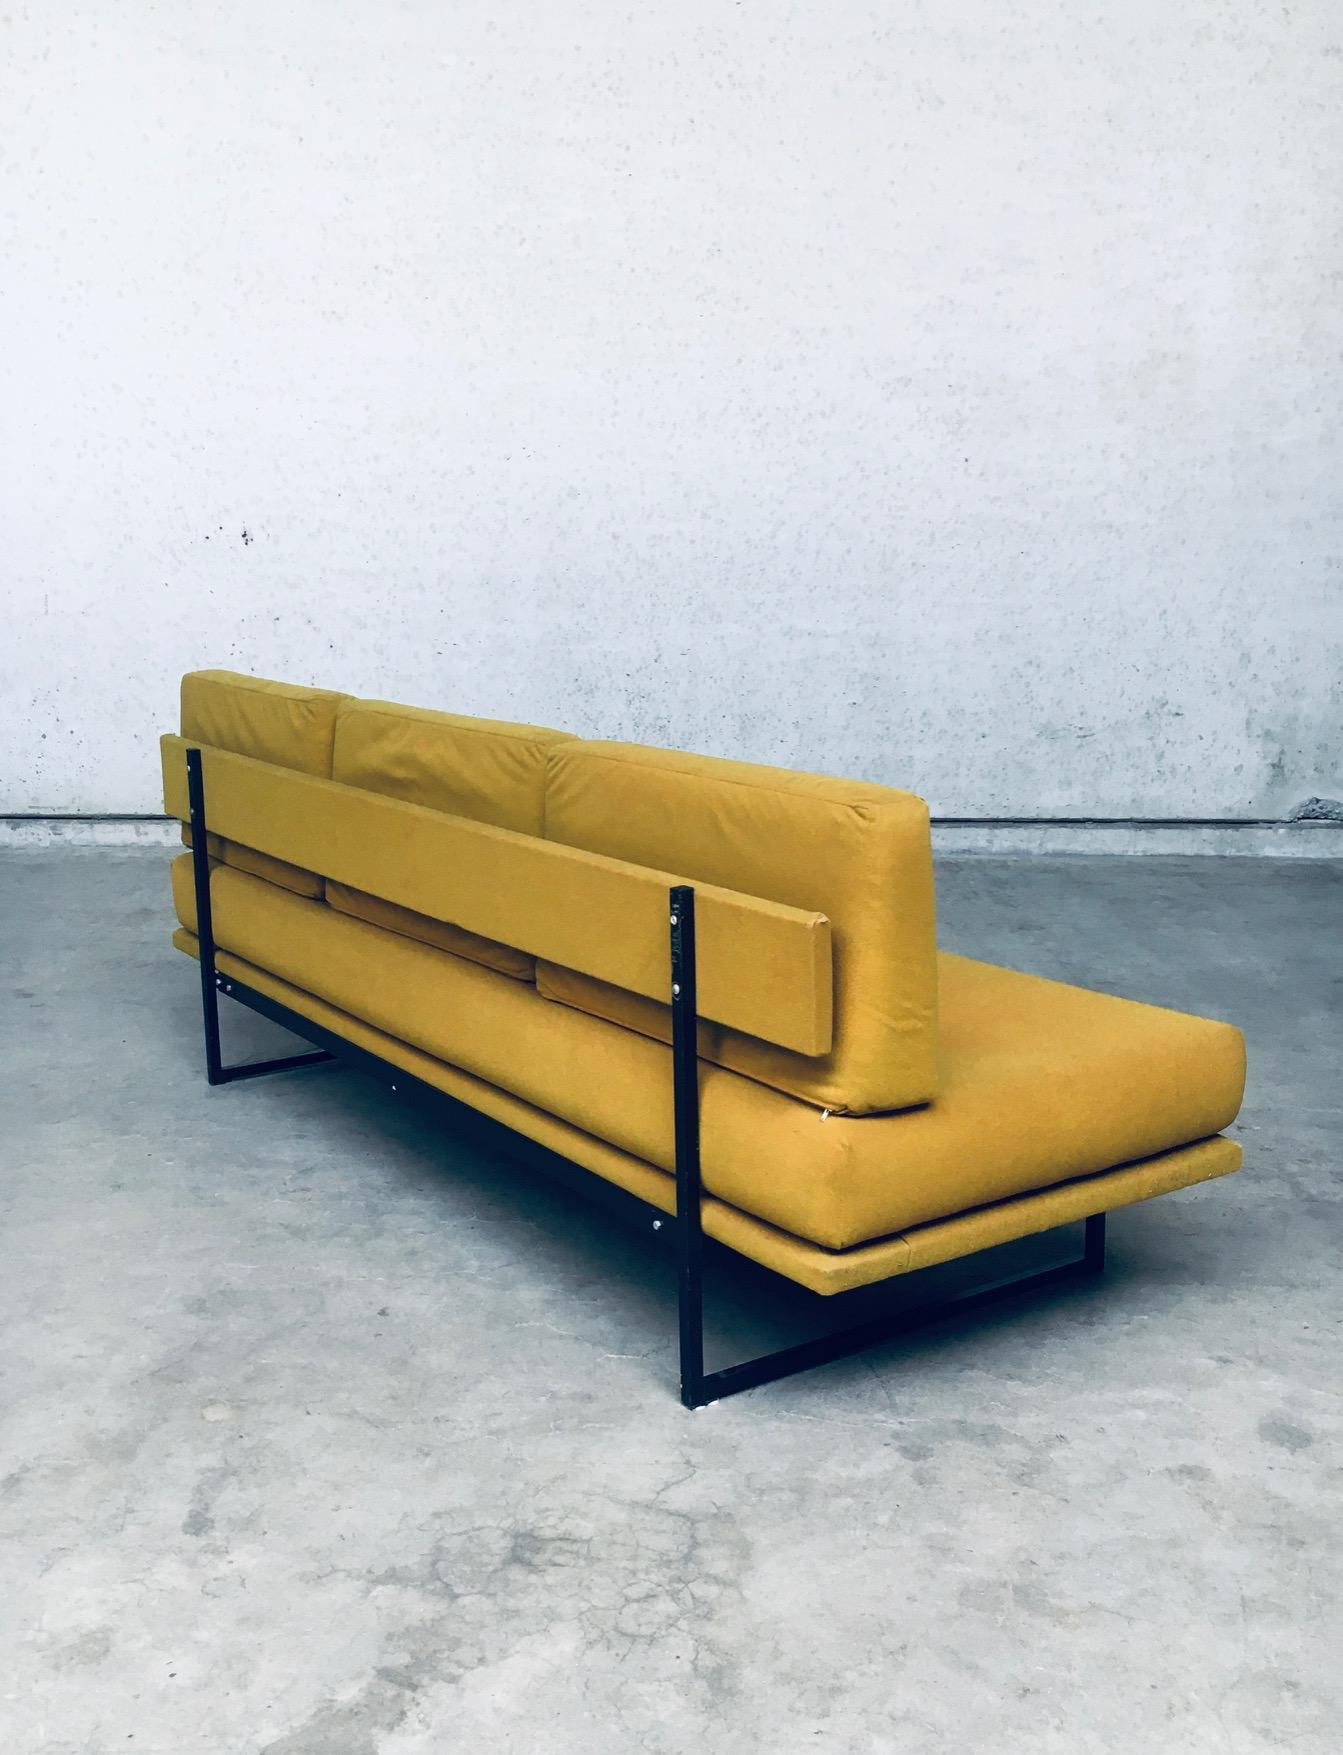 Metal 1960's Midcentury Modern Dutch Design 3 Seat Sofa Bench For Sale